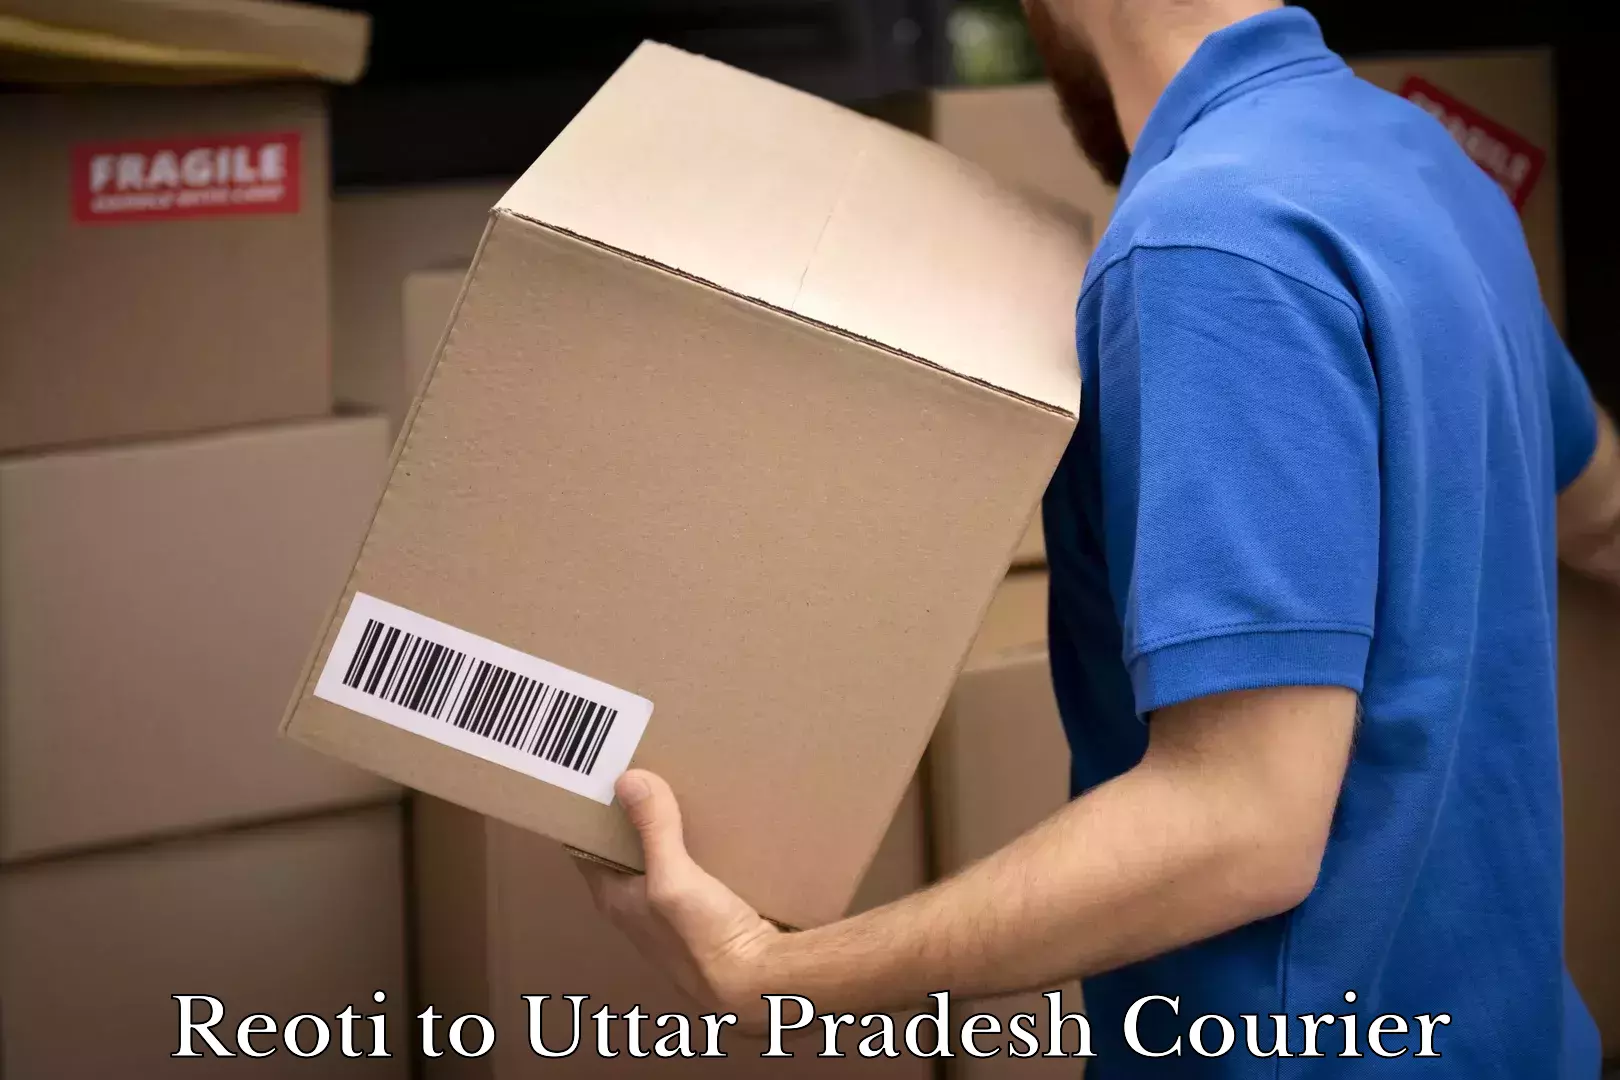 International courier networks Reoti to Uttar Pradesh